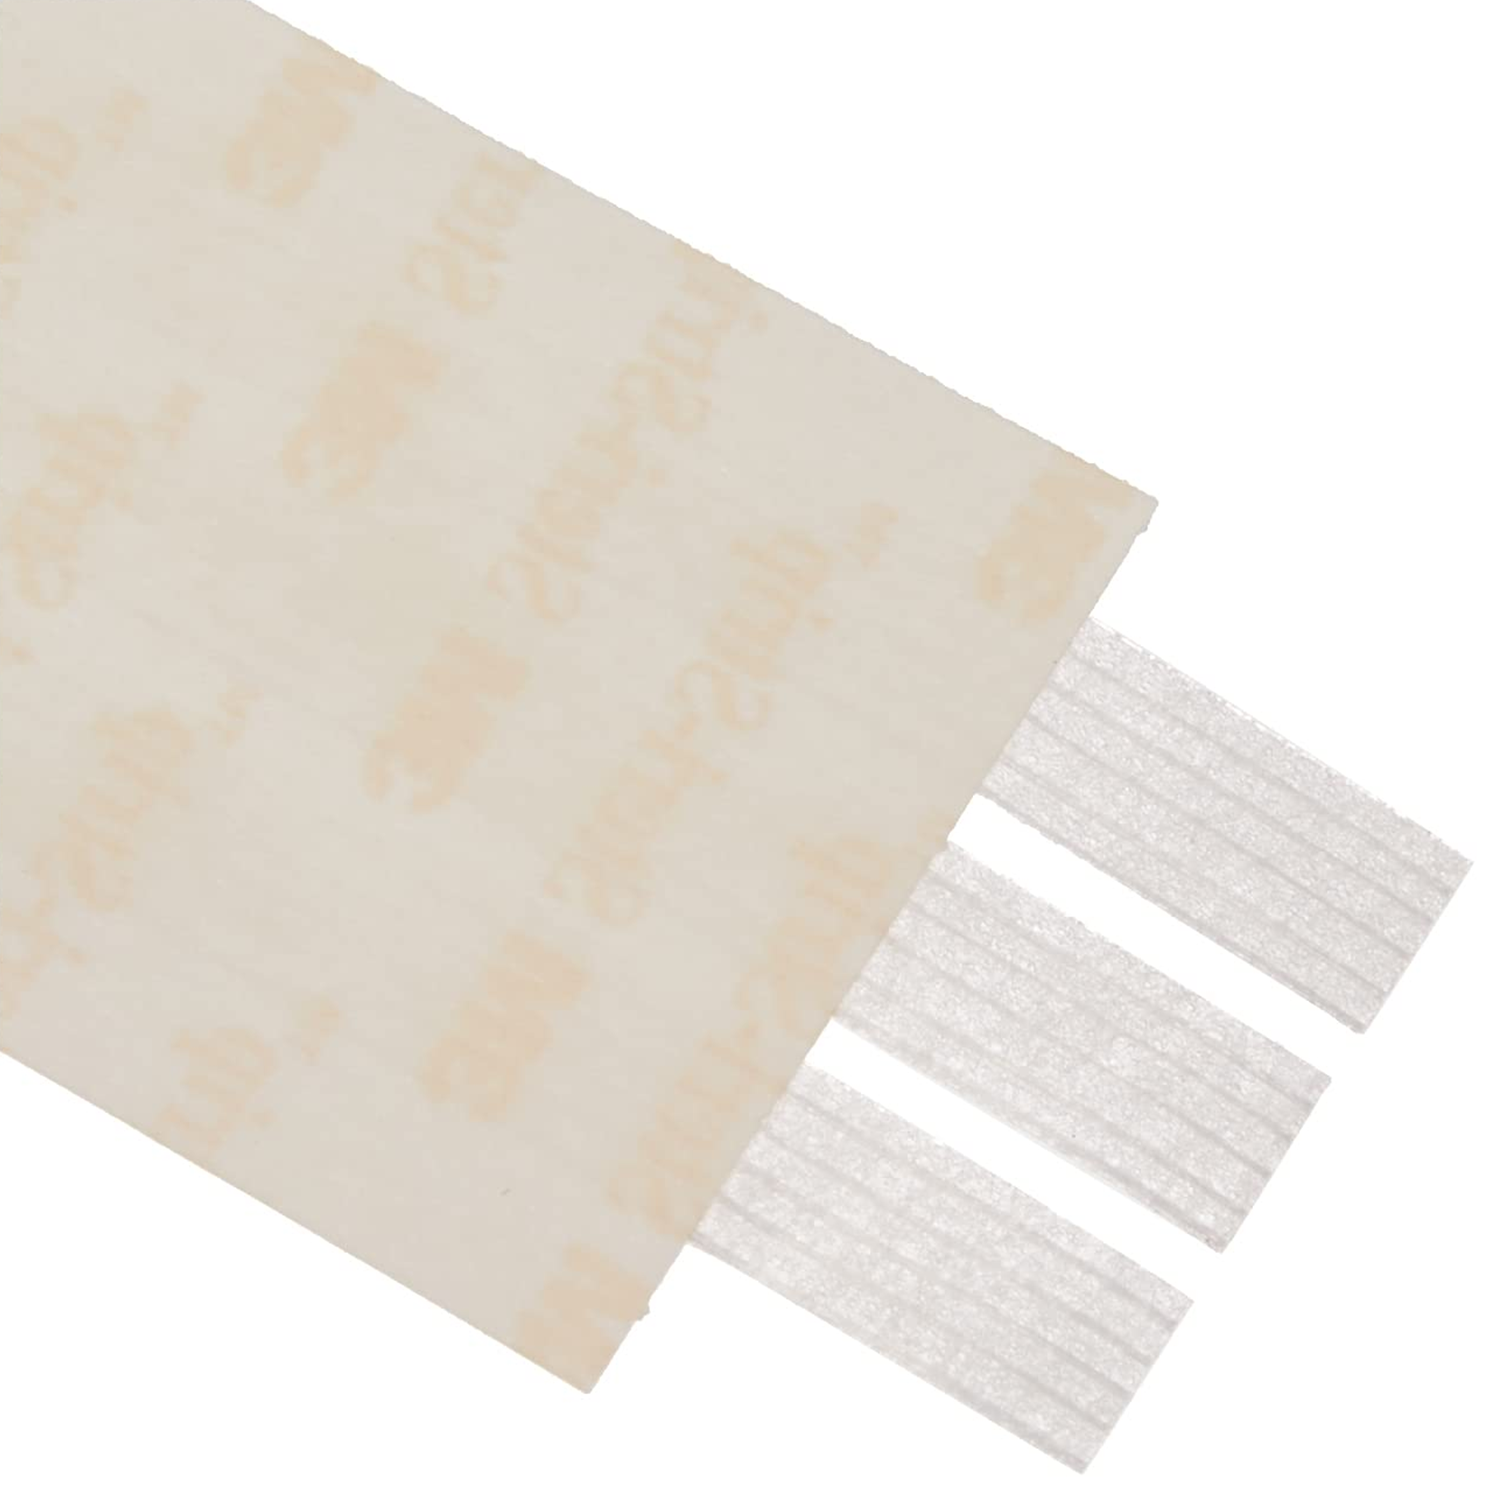 3M Steri-Strip Reinforced Adhesive Skin Closures | 6 x 75mm | Pack of 50 (4)